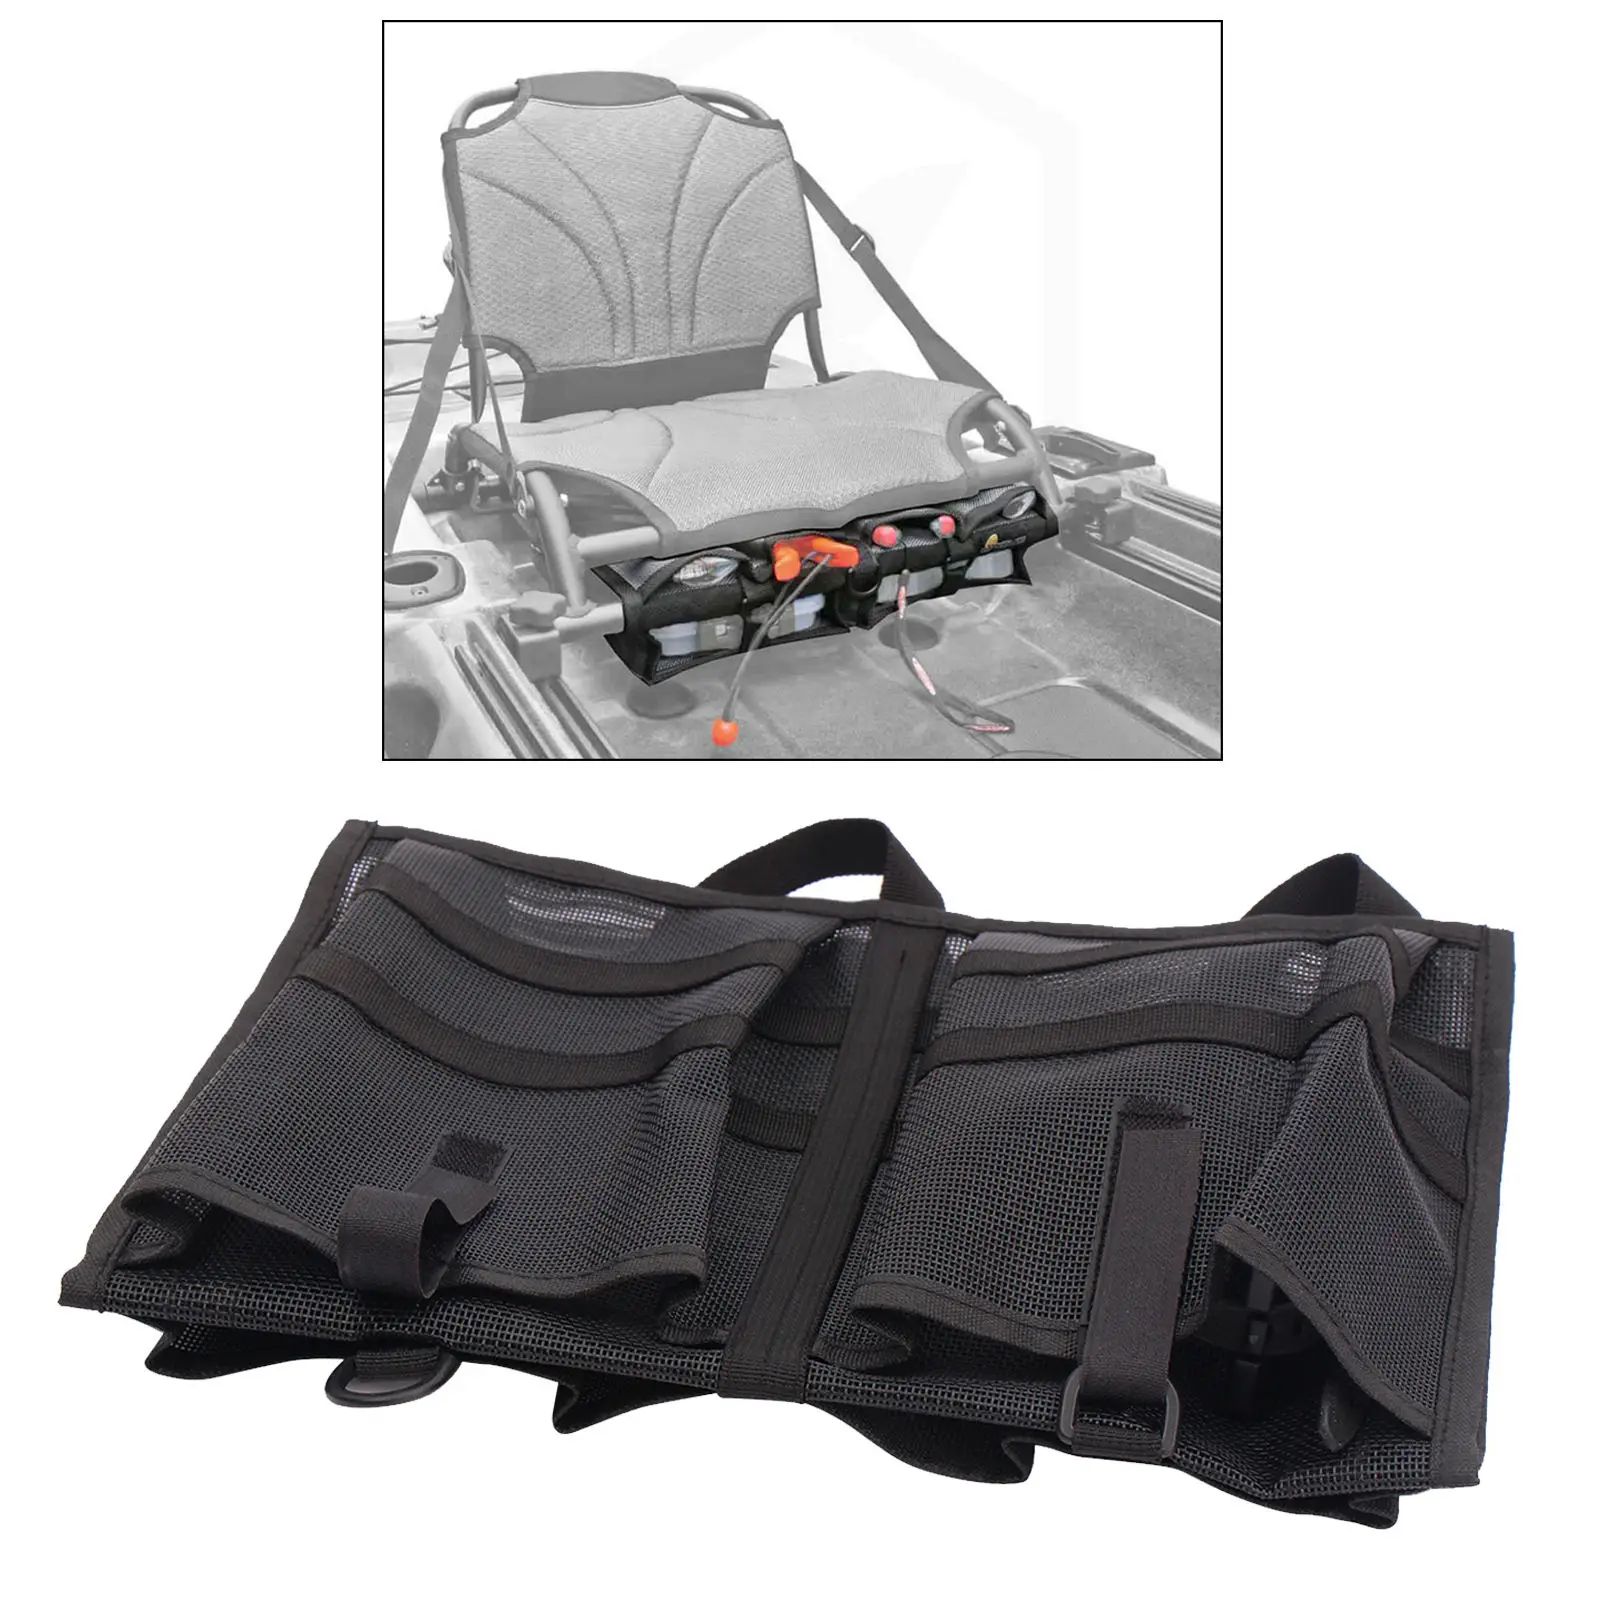 Details about   Nylon Mesh Kayak Storage Bag Canoe Seat Kayak Accessories Storage Tool  Protable 